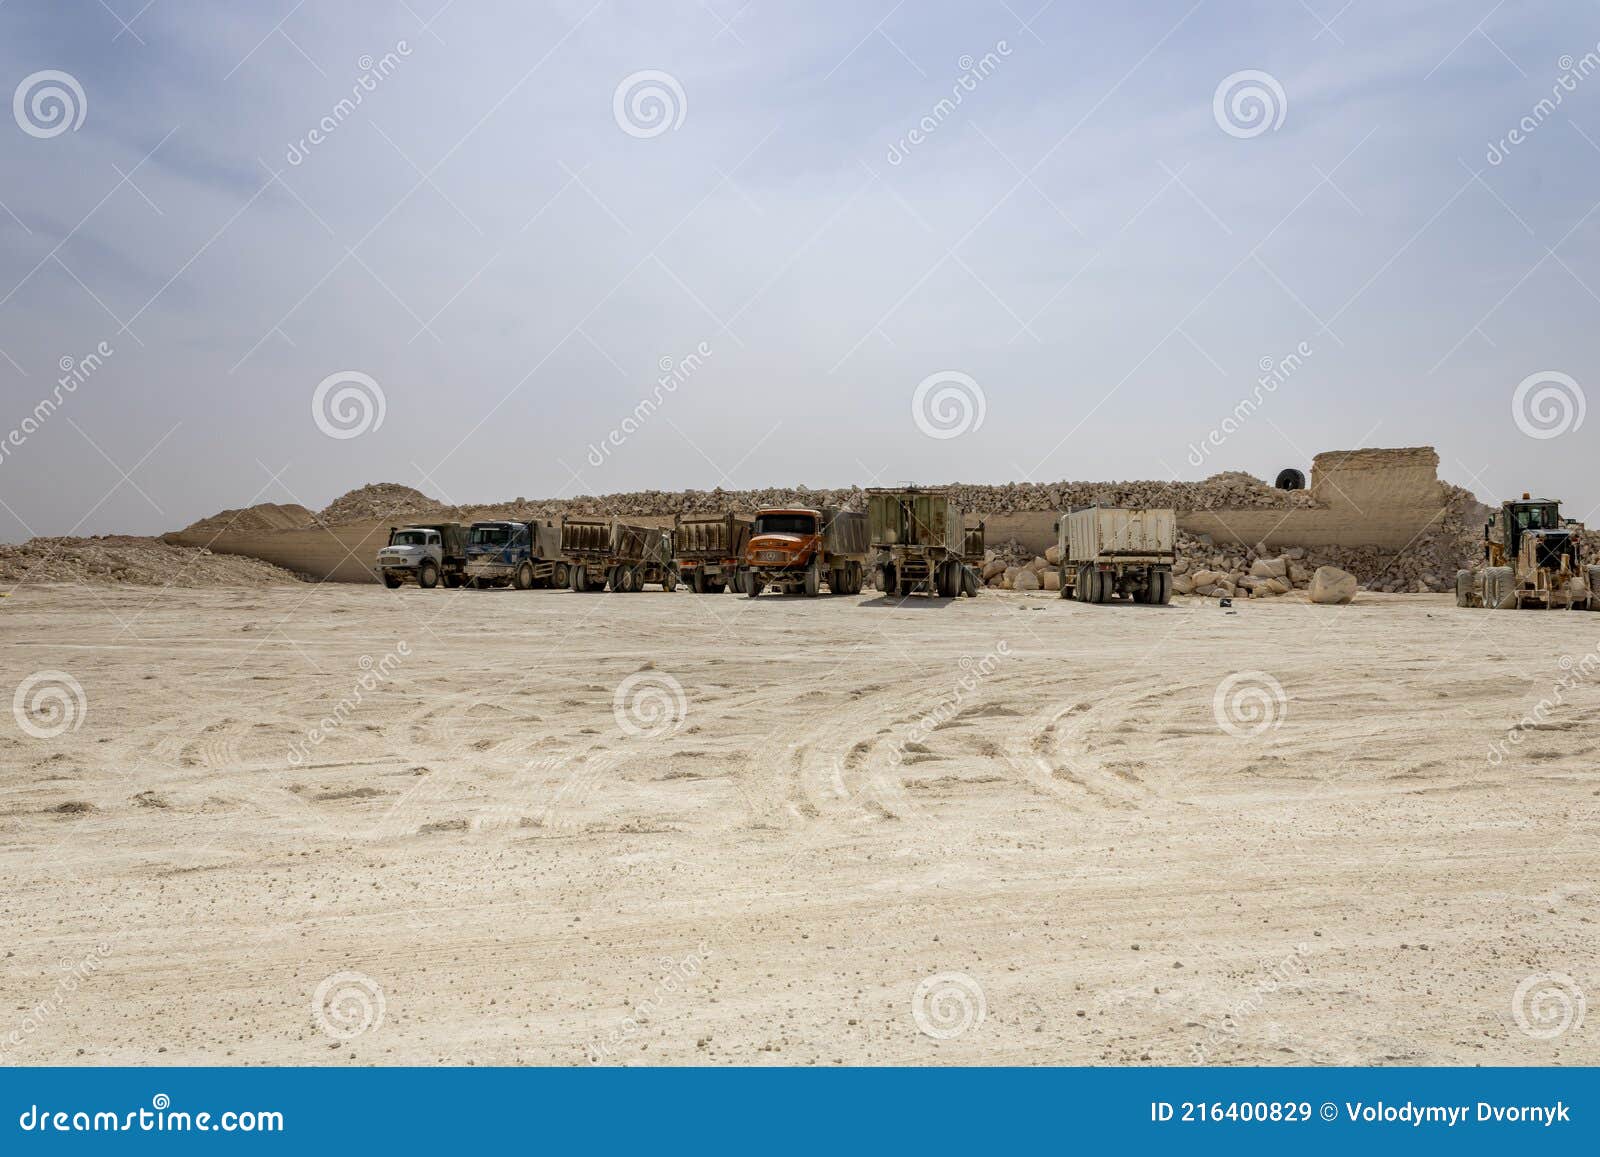 dump trucks on al qiddiya project construction site.